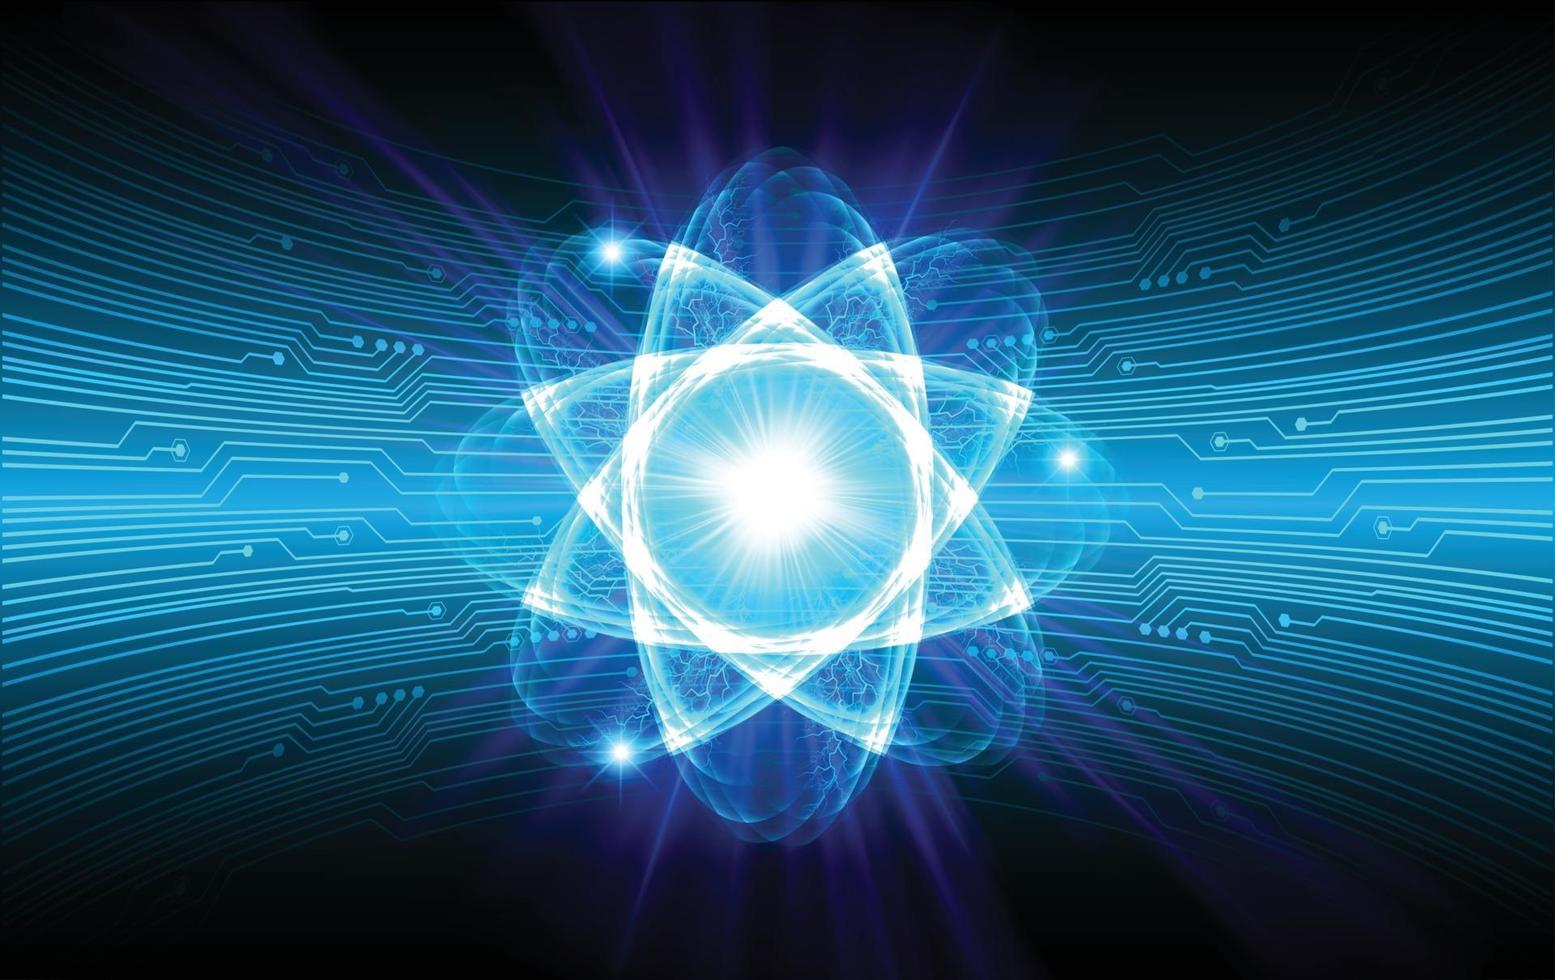 Shining atom scheme. Vector illustration.